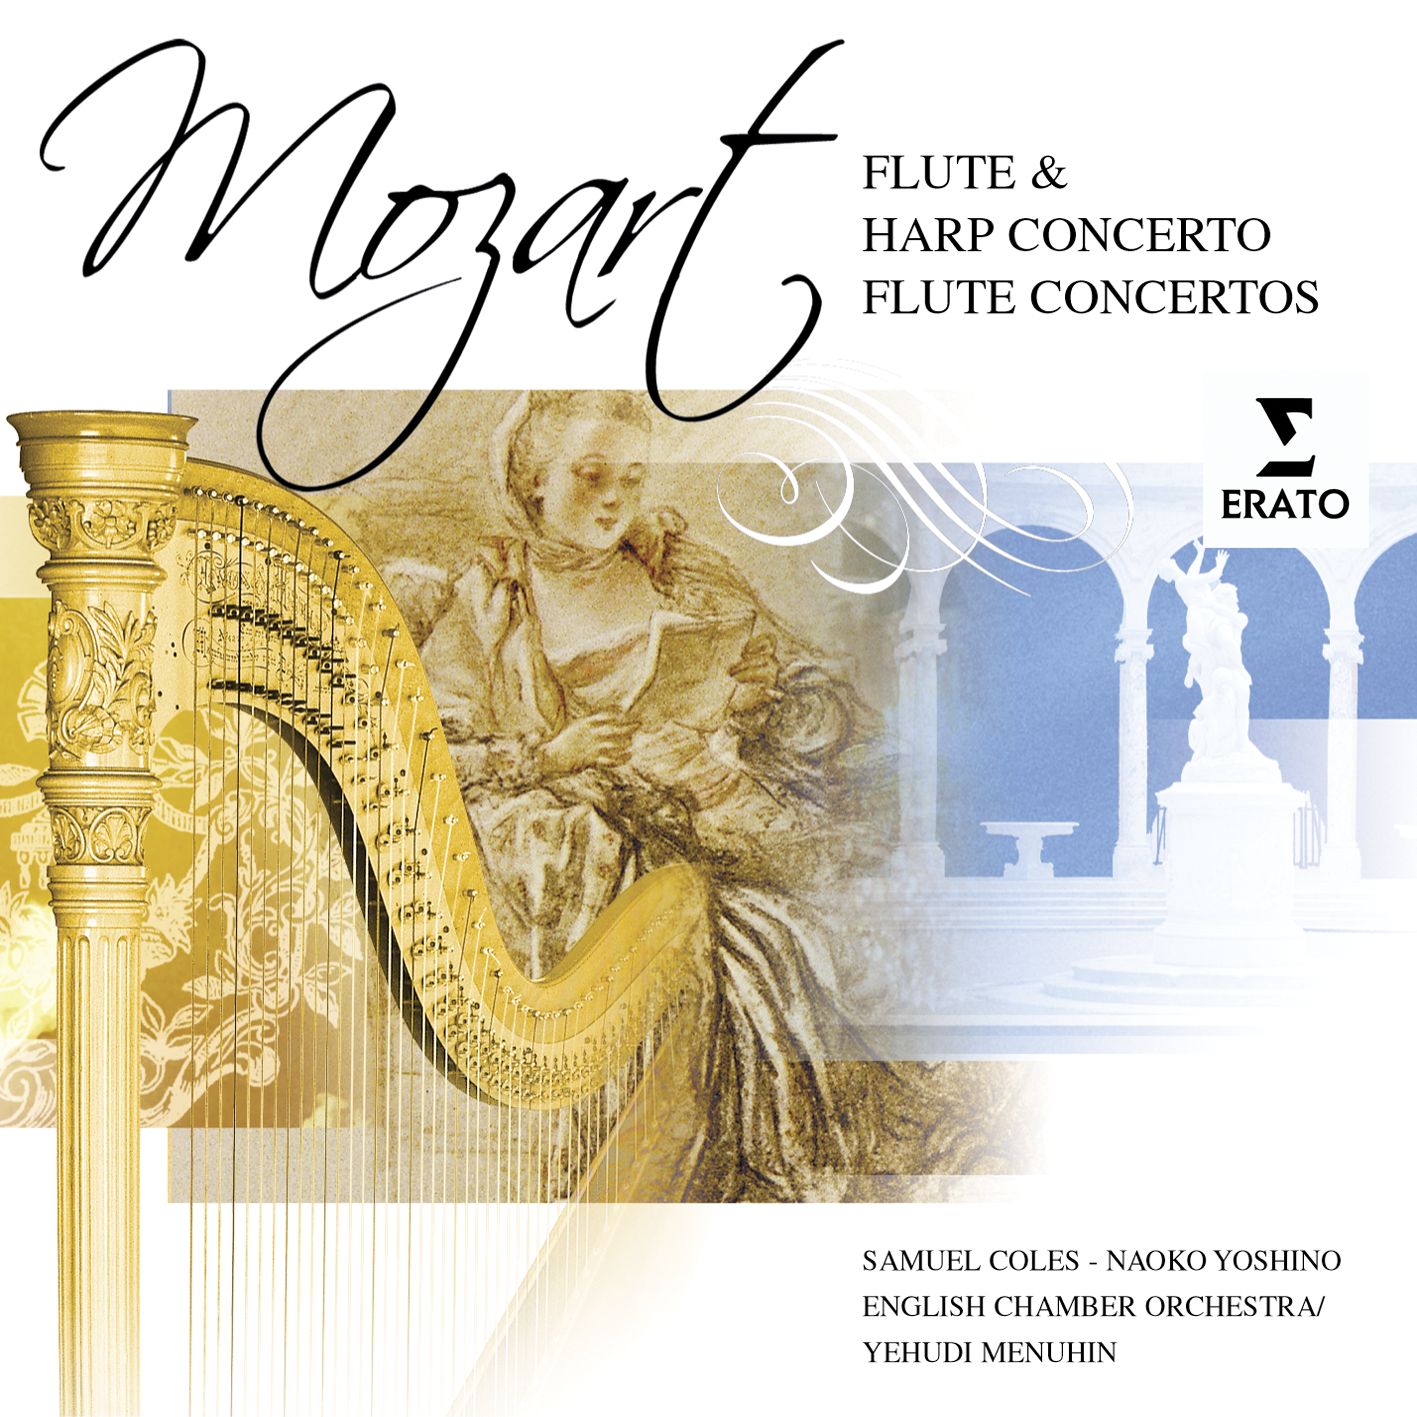 Concerto for Flute and Orchestra No. 1 in G K313/K285c: I. Allegro maestoso